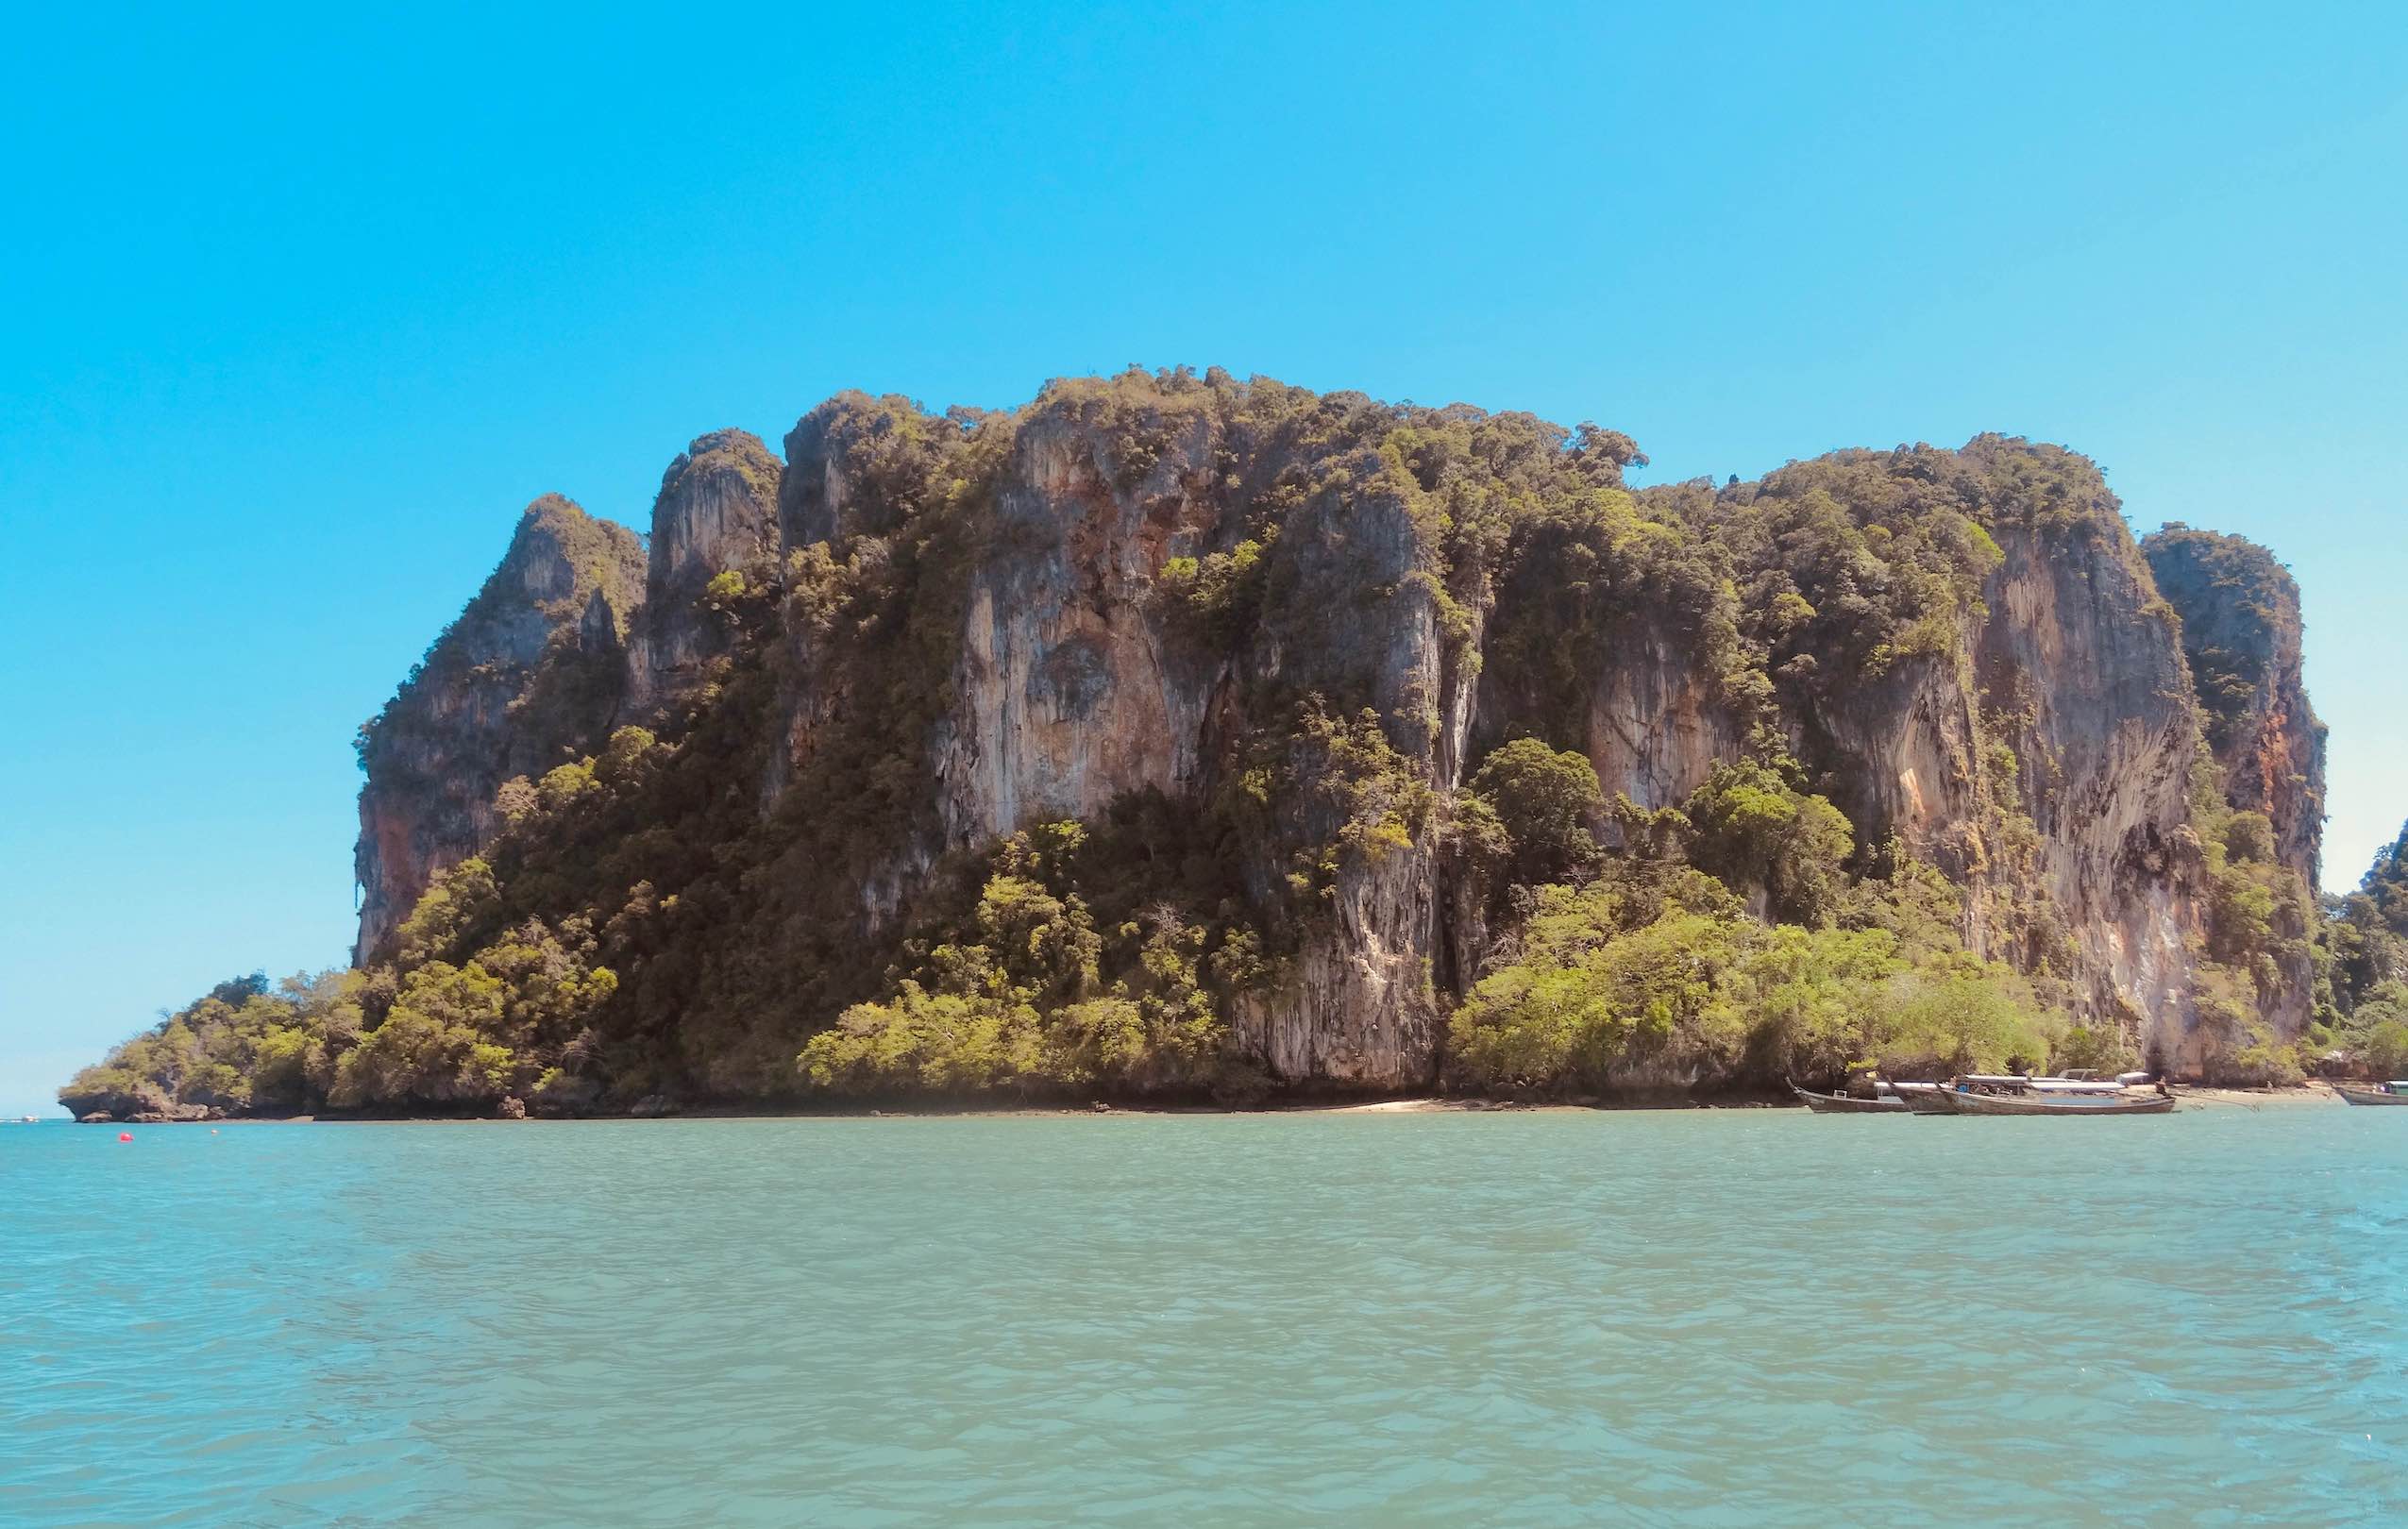 Railay peninsula in Thailand.